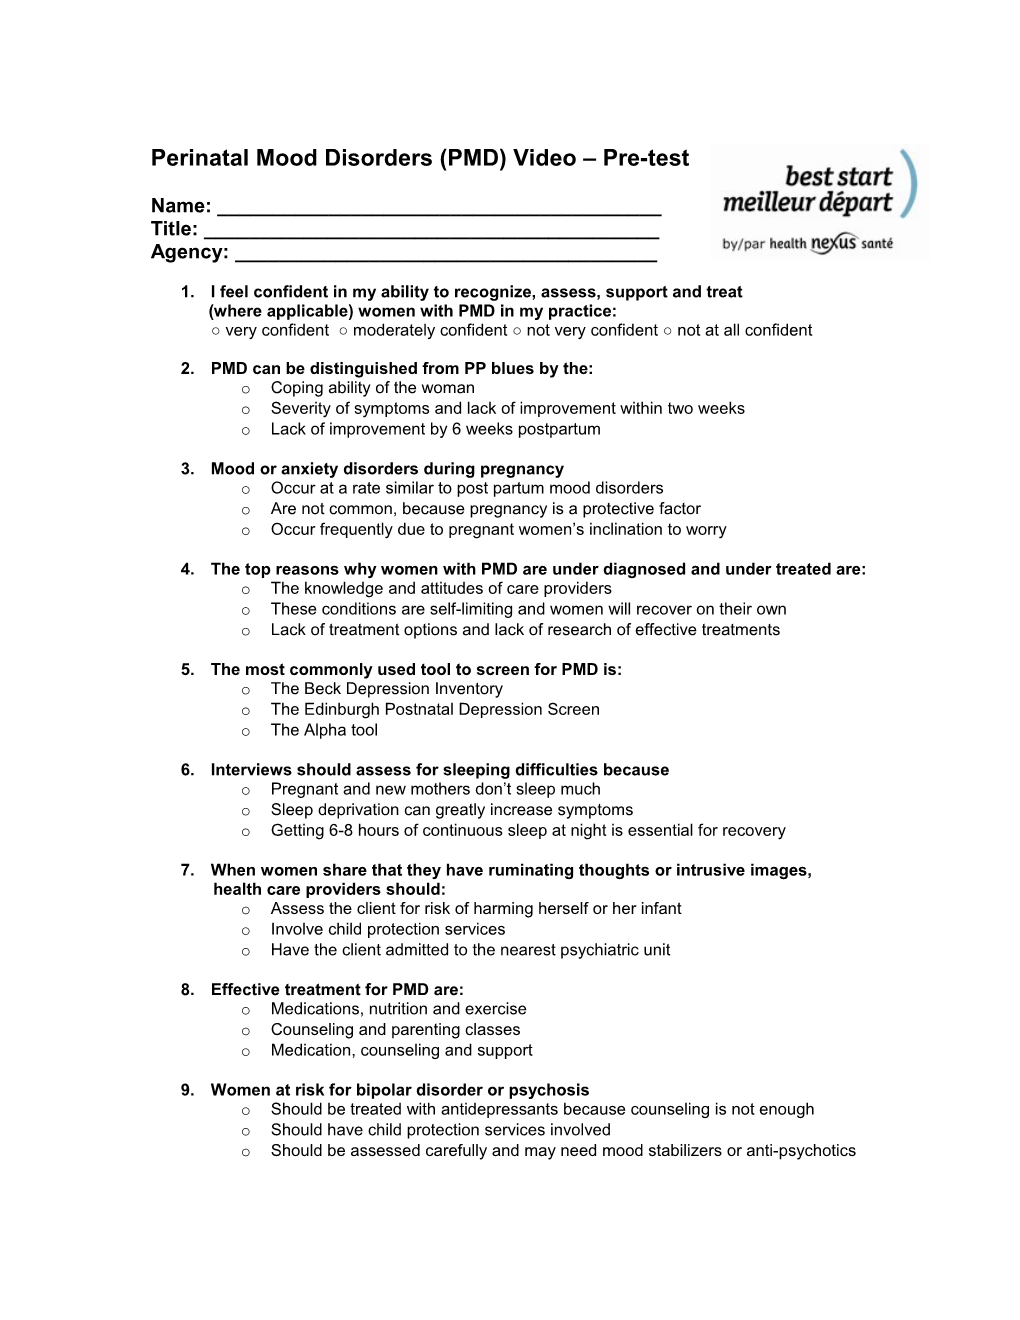 Perinatal Mood Disorders (PND) Pre-Test